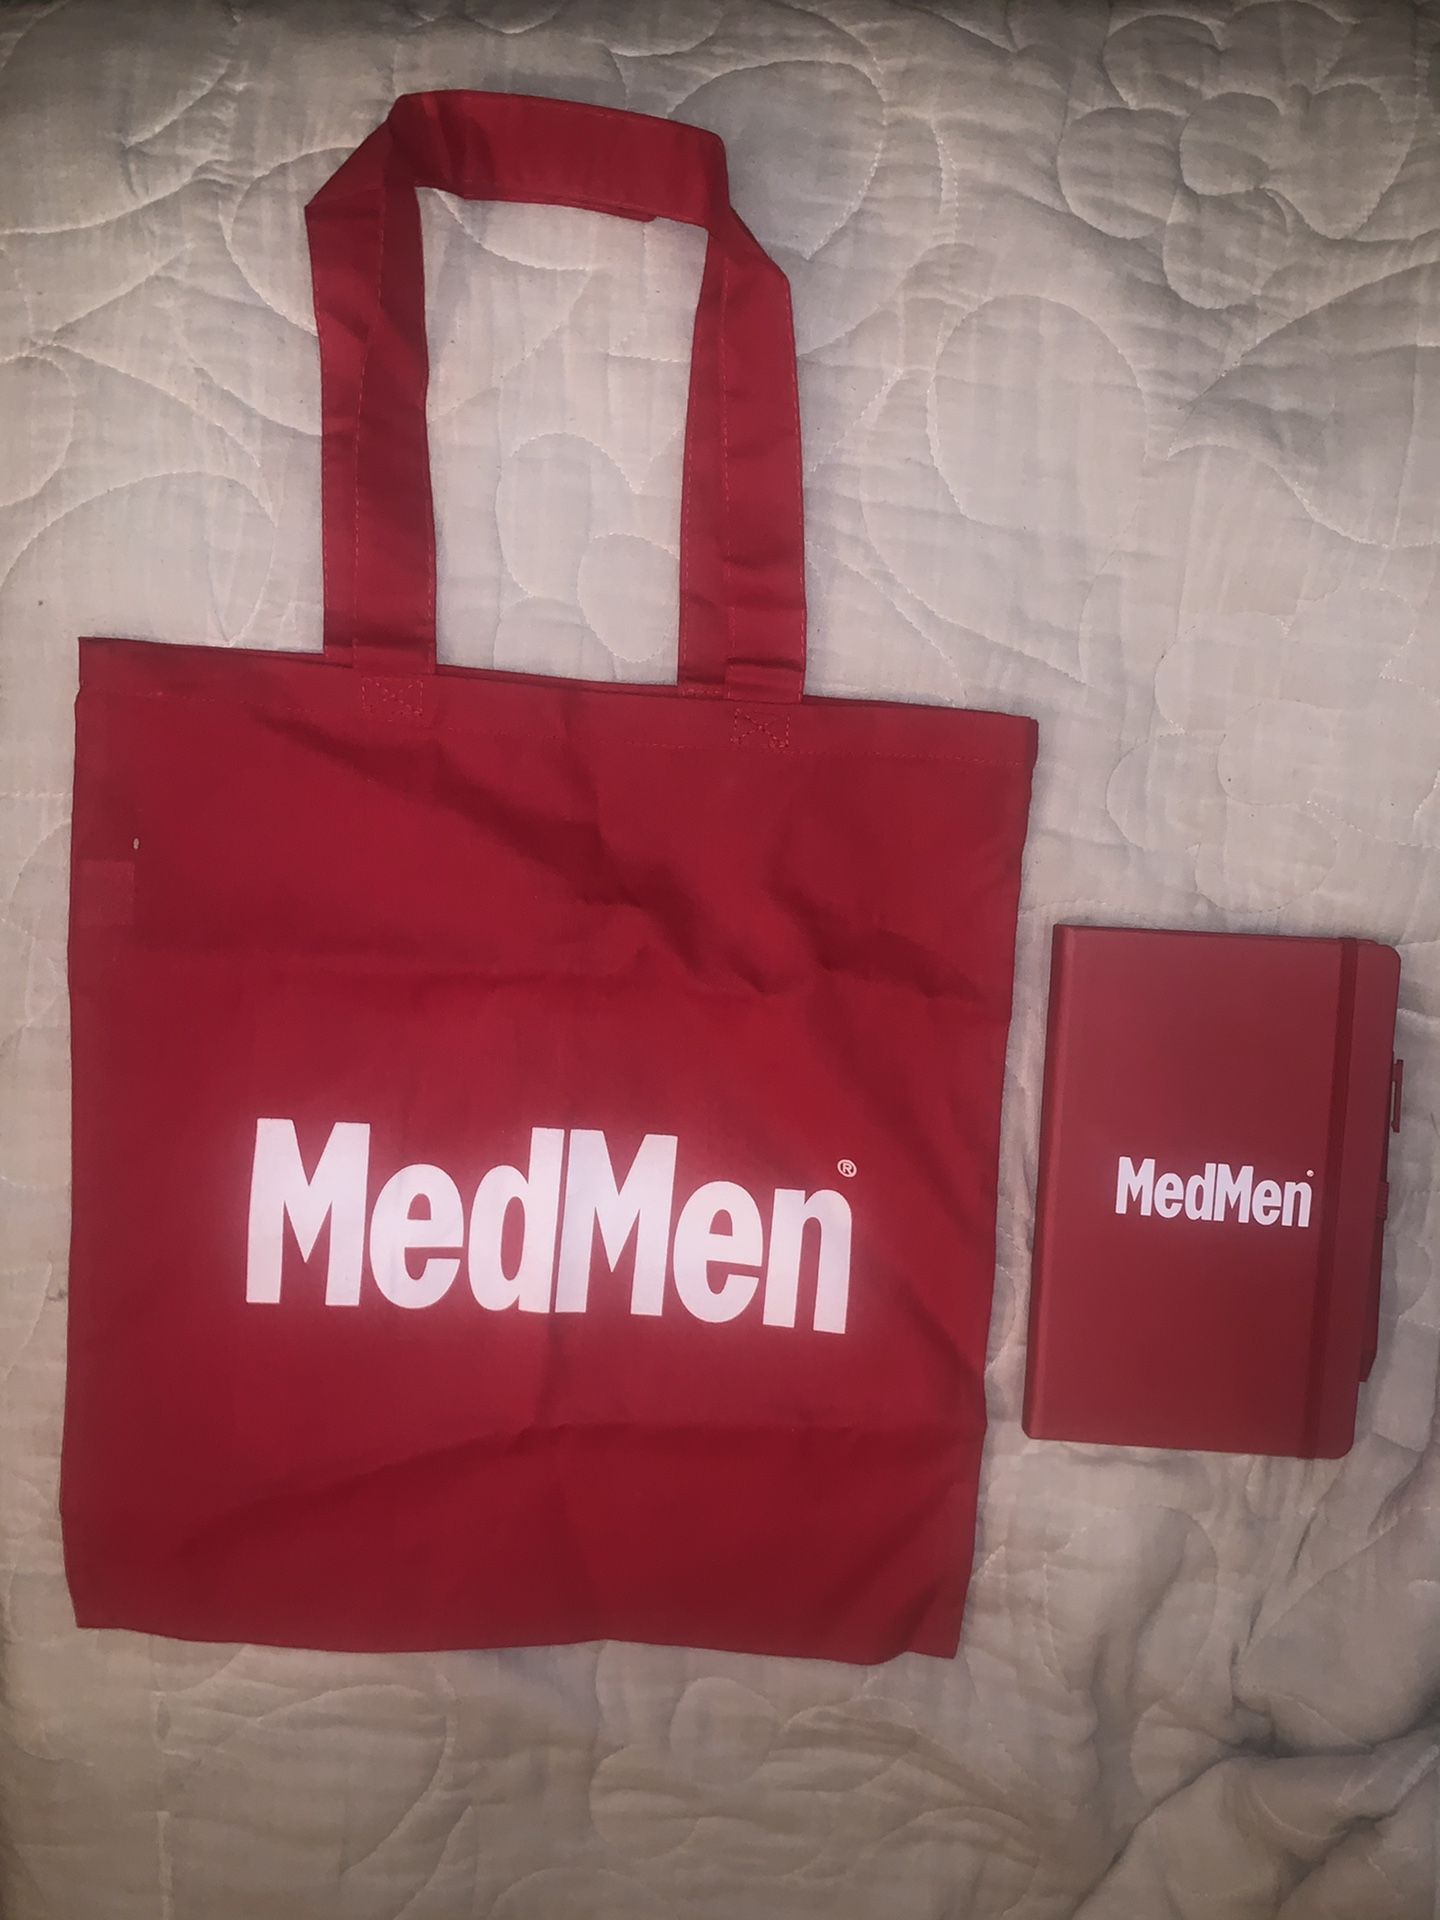 MedMen journal and cloth tote bag